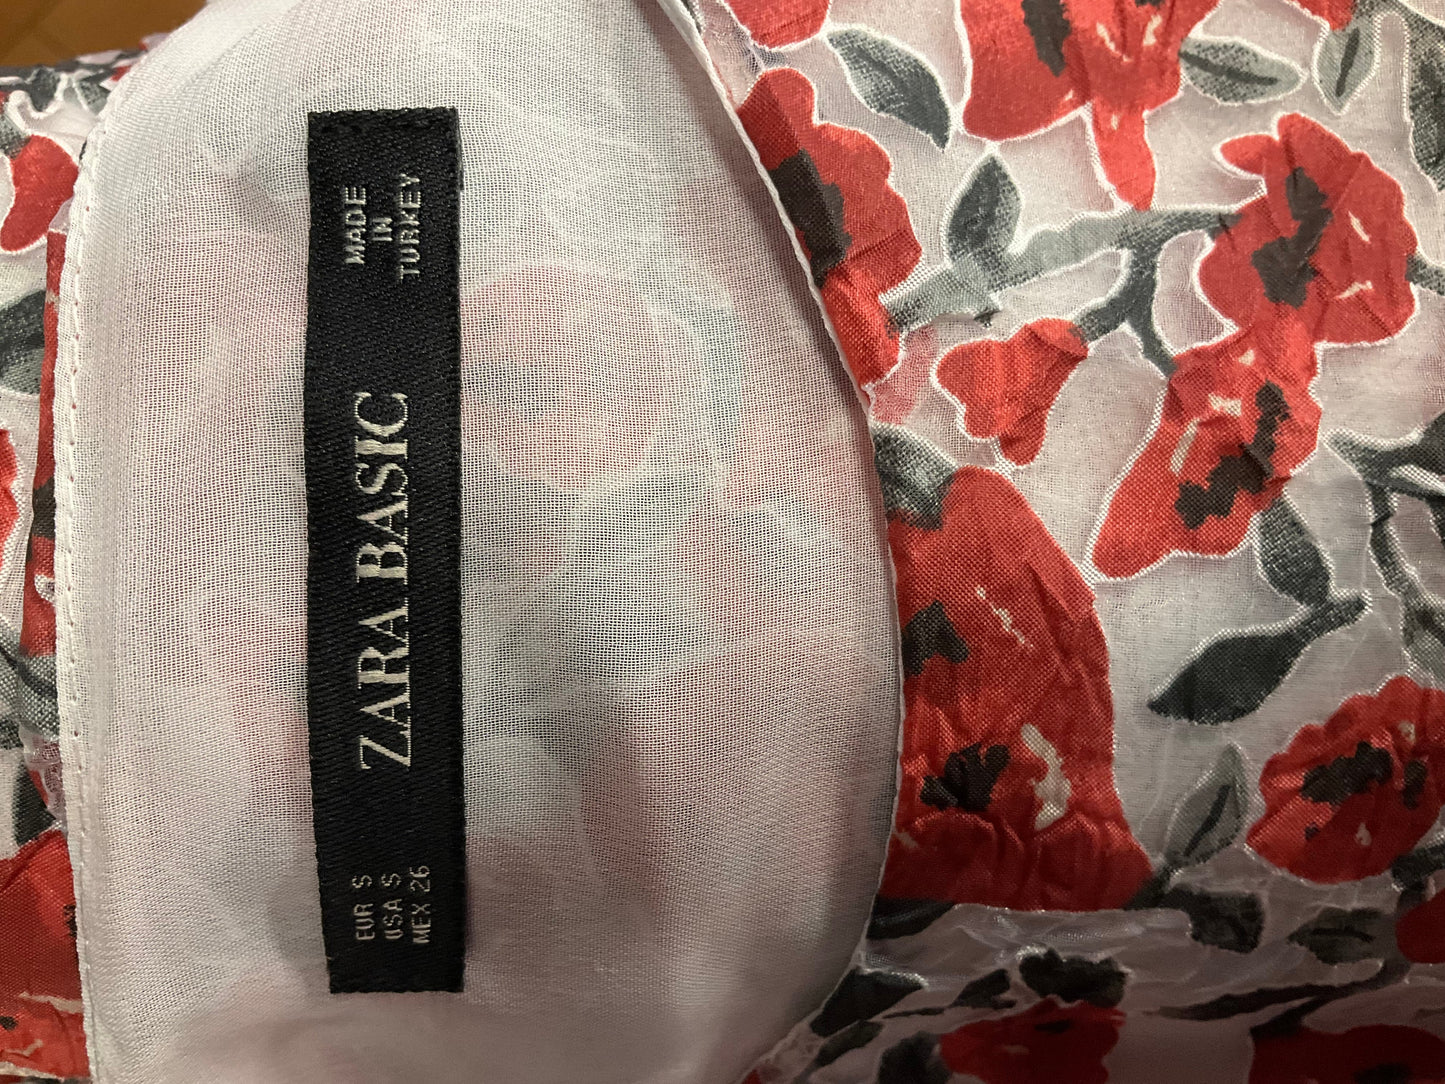 Top Sleeveless By Zara Basic  Size: S